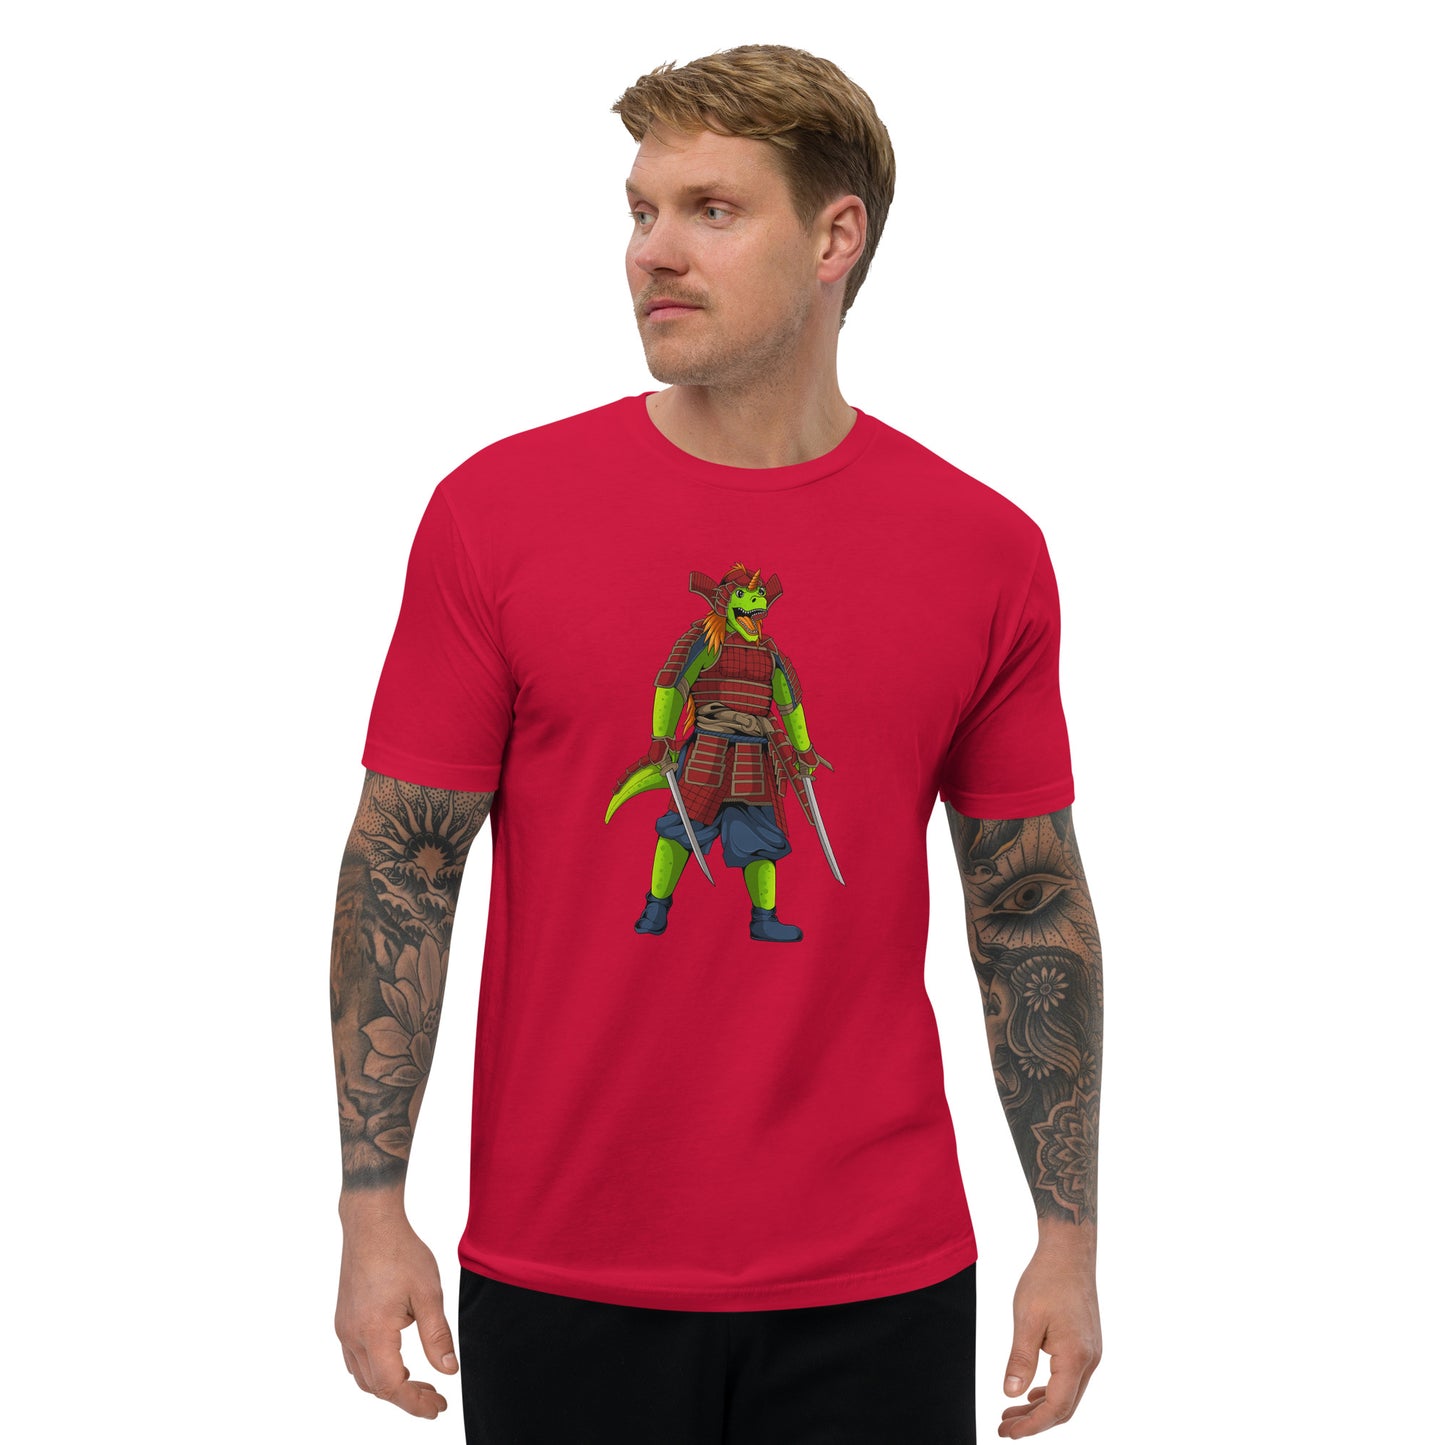 Tyracorn proud samurai T-shirt